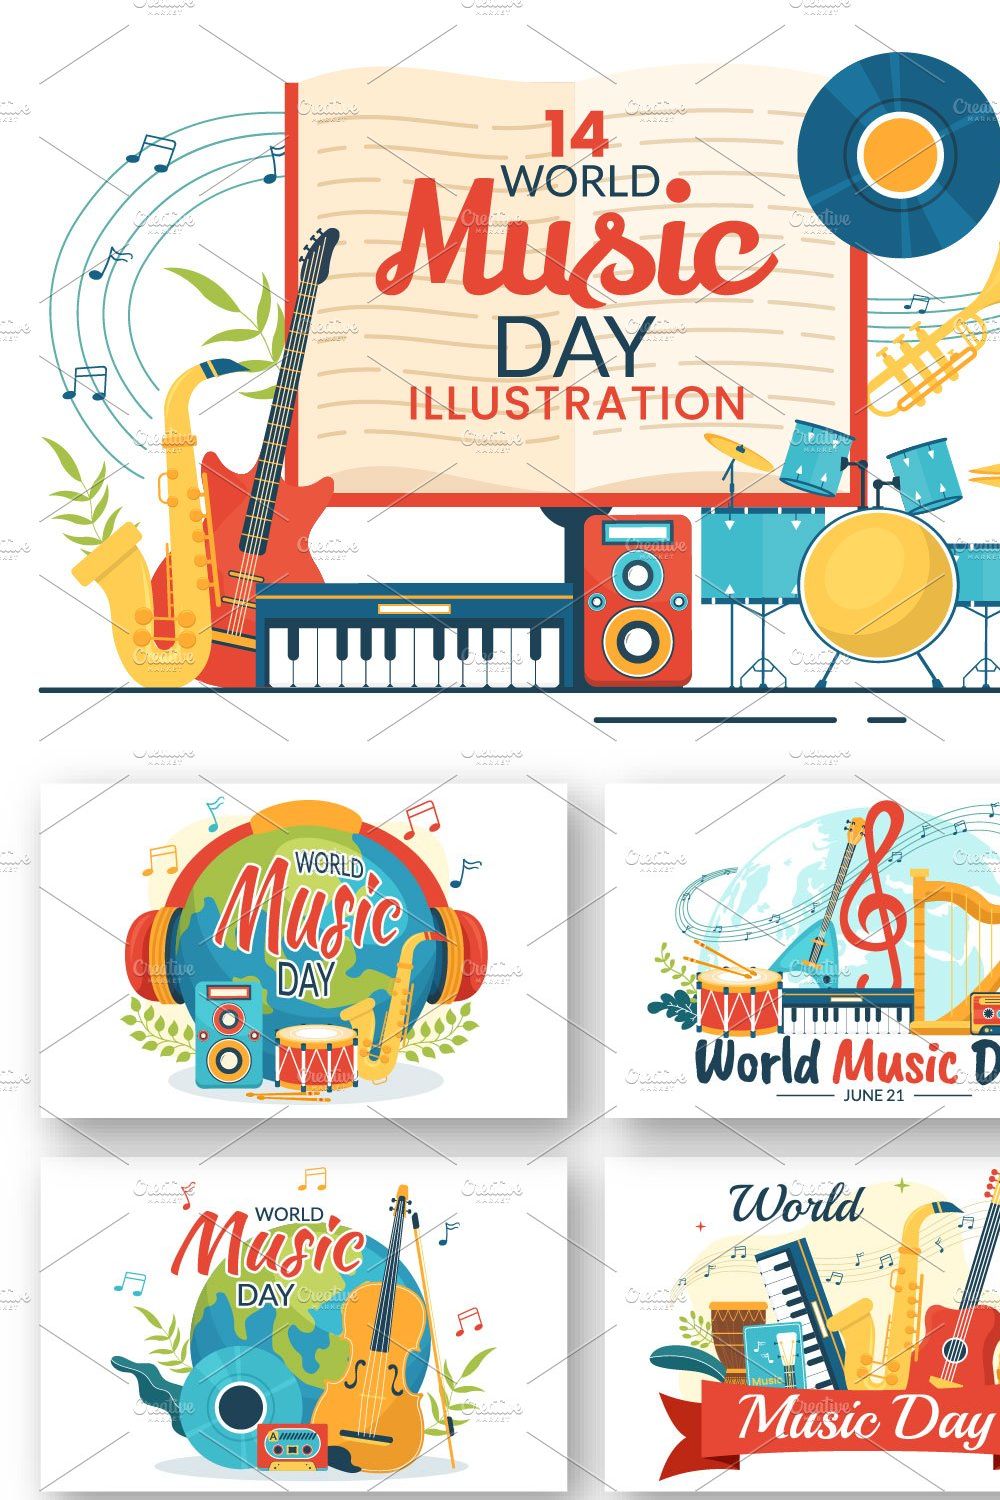 14 World Music Day Illustration pinterest preview image.